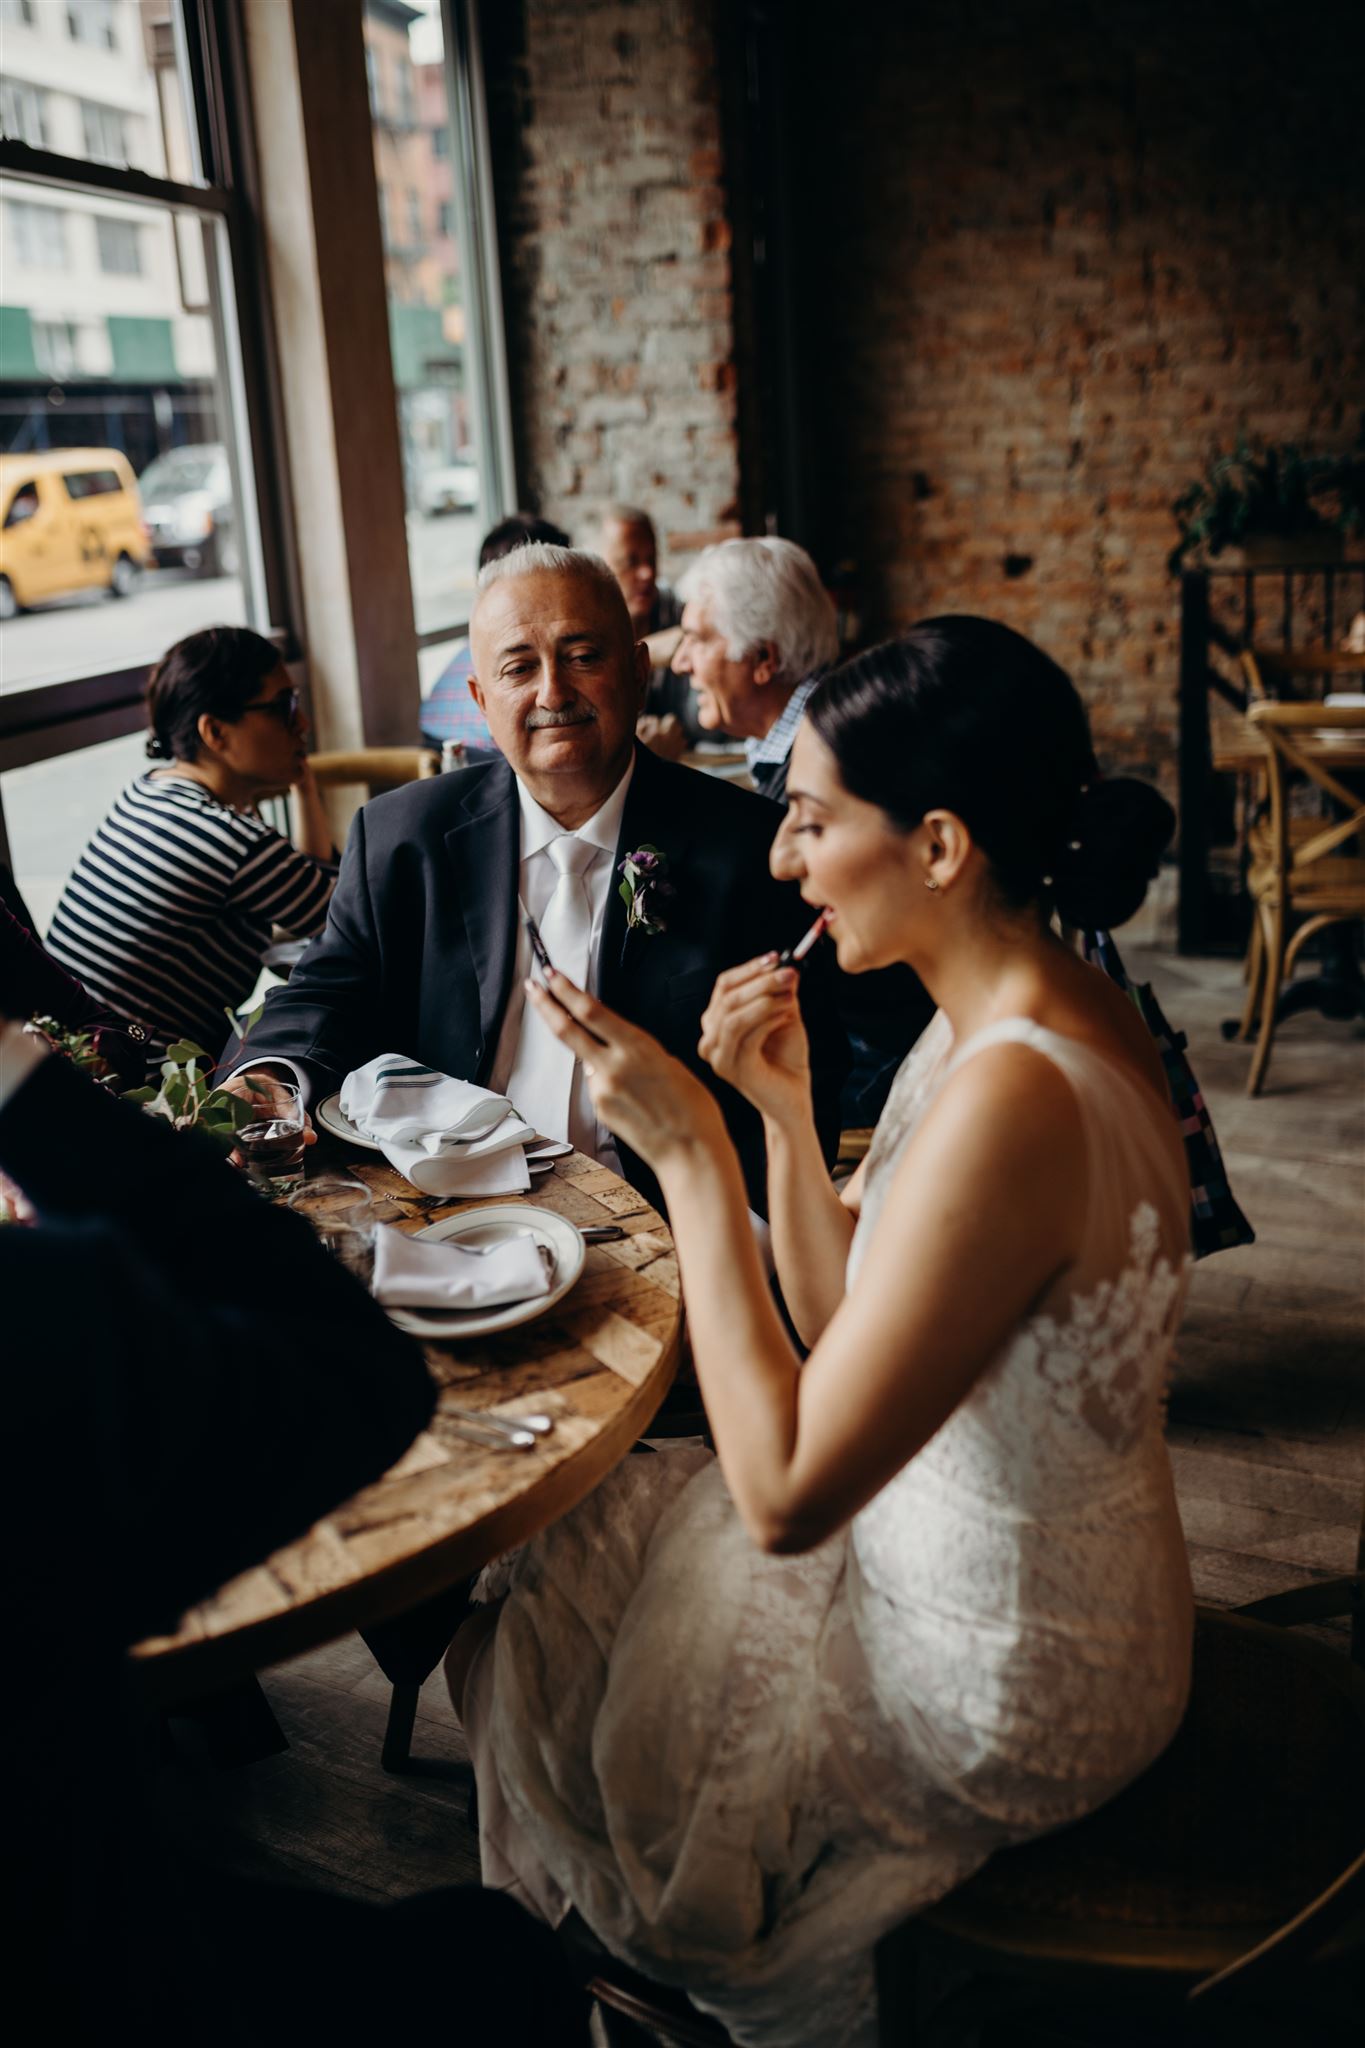 new york city, nyc wedding photographer